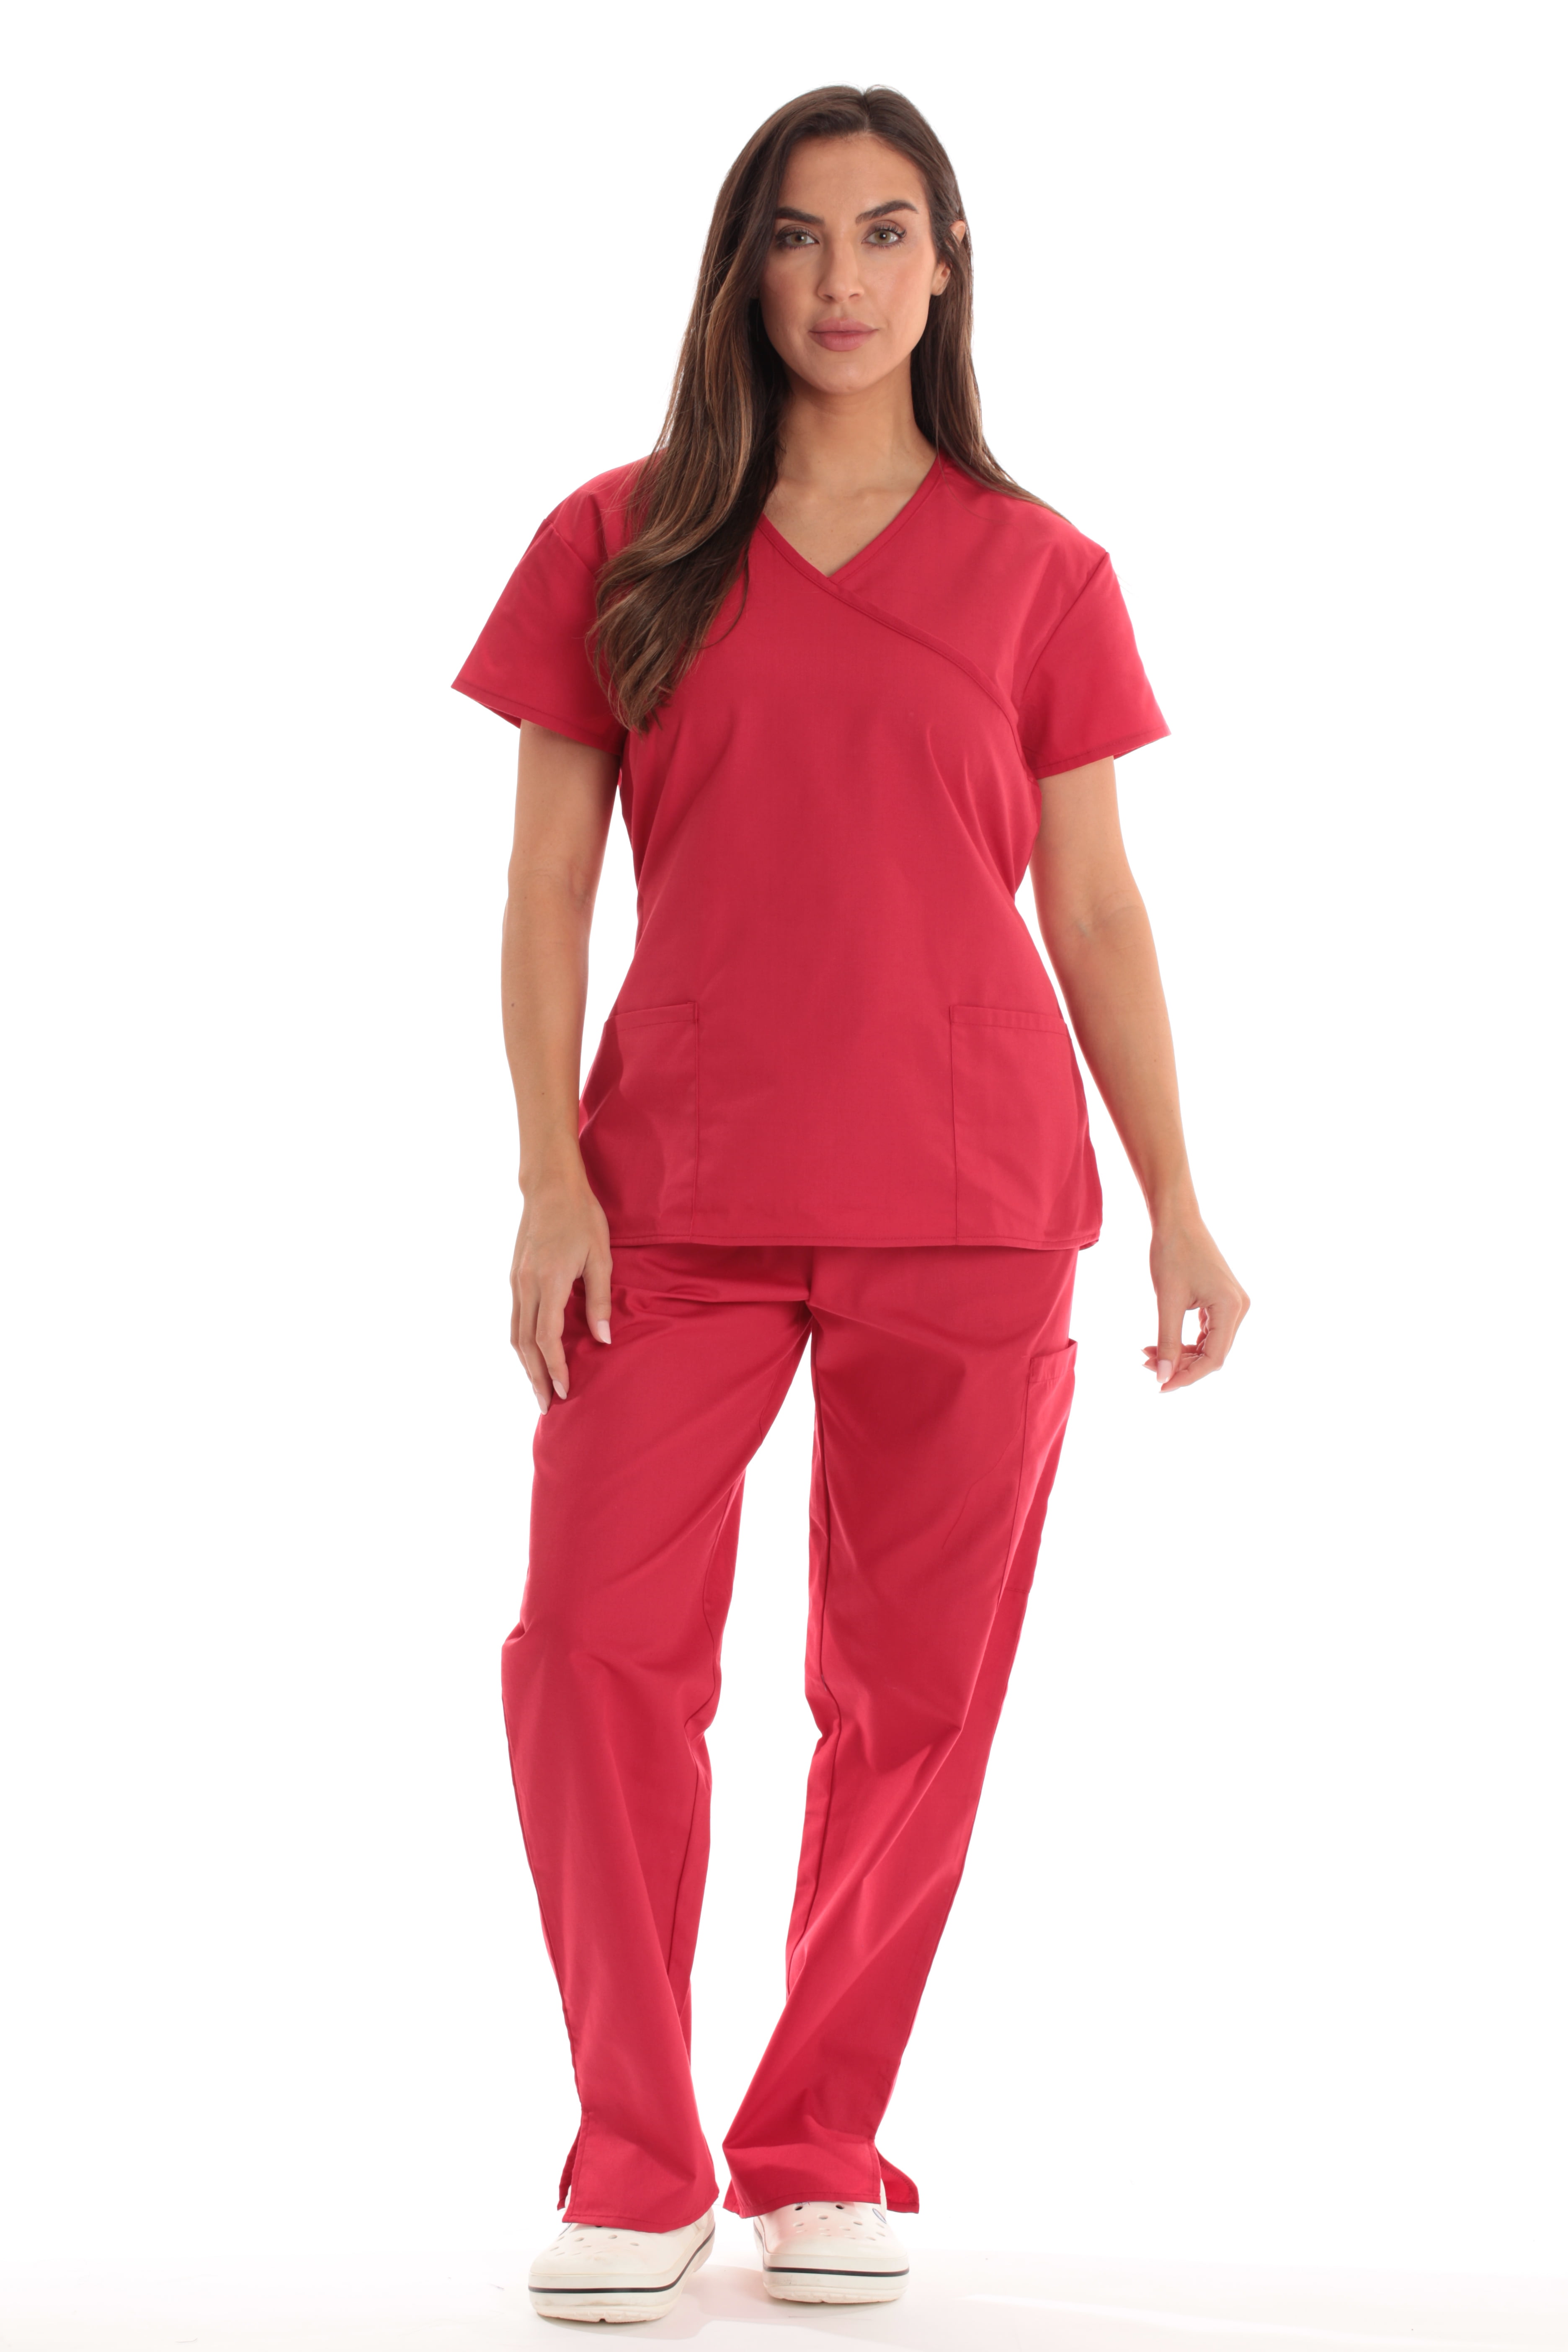 11153W Just Love Women's Scrub Sets / Medical Scrubs / Nursing Scrubs - S  (1X, Red with Red Trim)